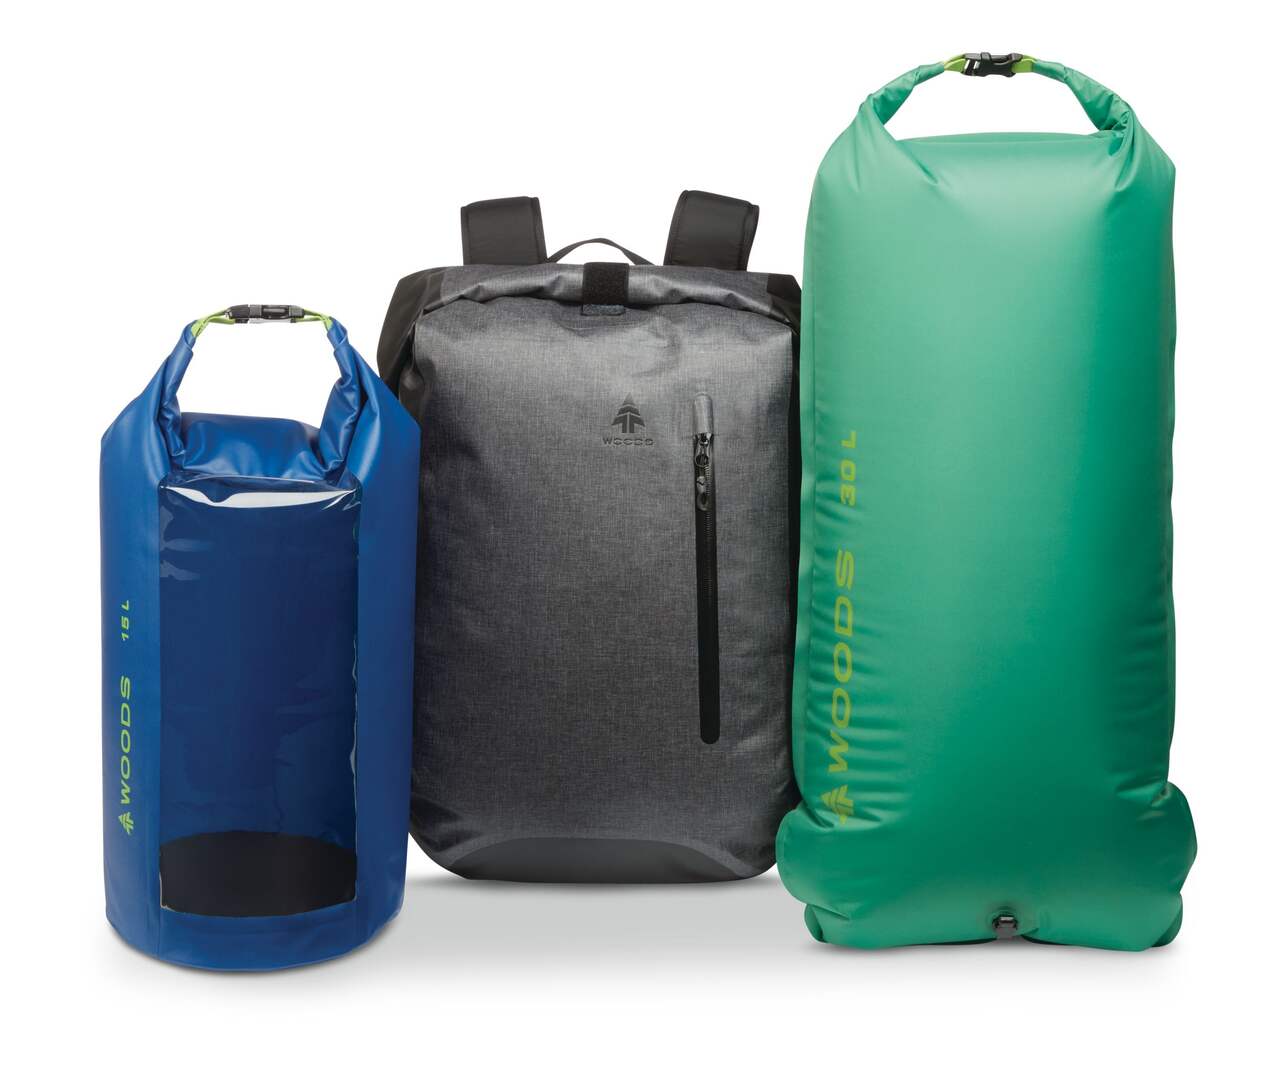 Waterproof Backpack Sack Roll-Top Closure Dry Bag for Fishing